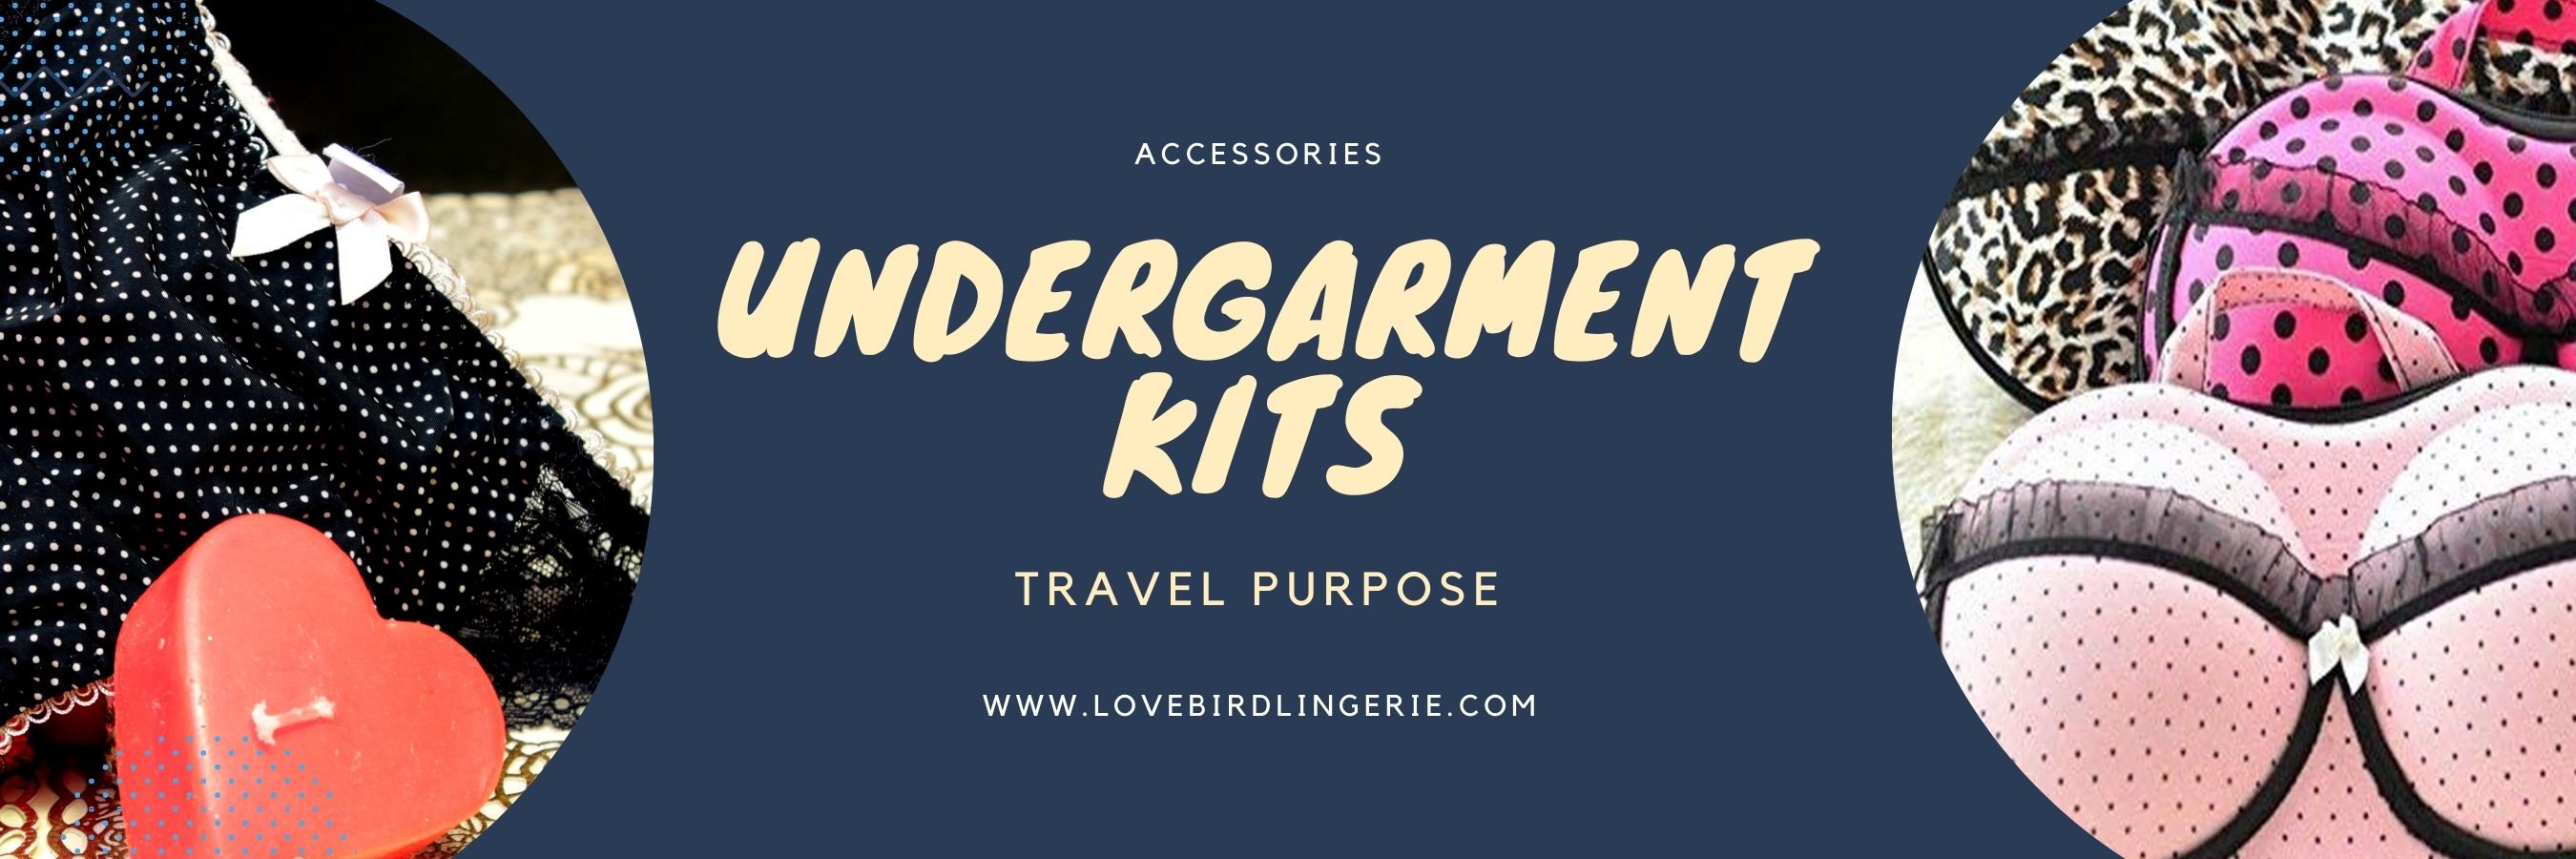 Undergarments Kit are the addo banner lovebird